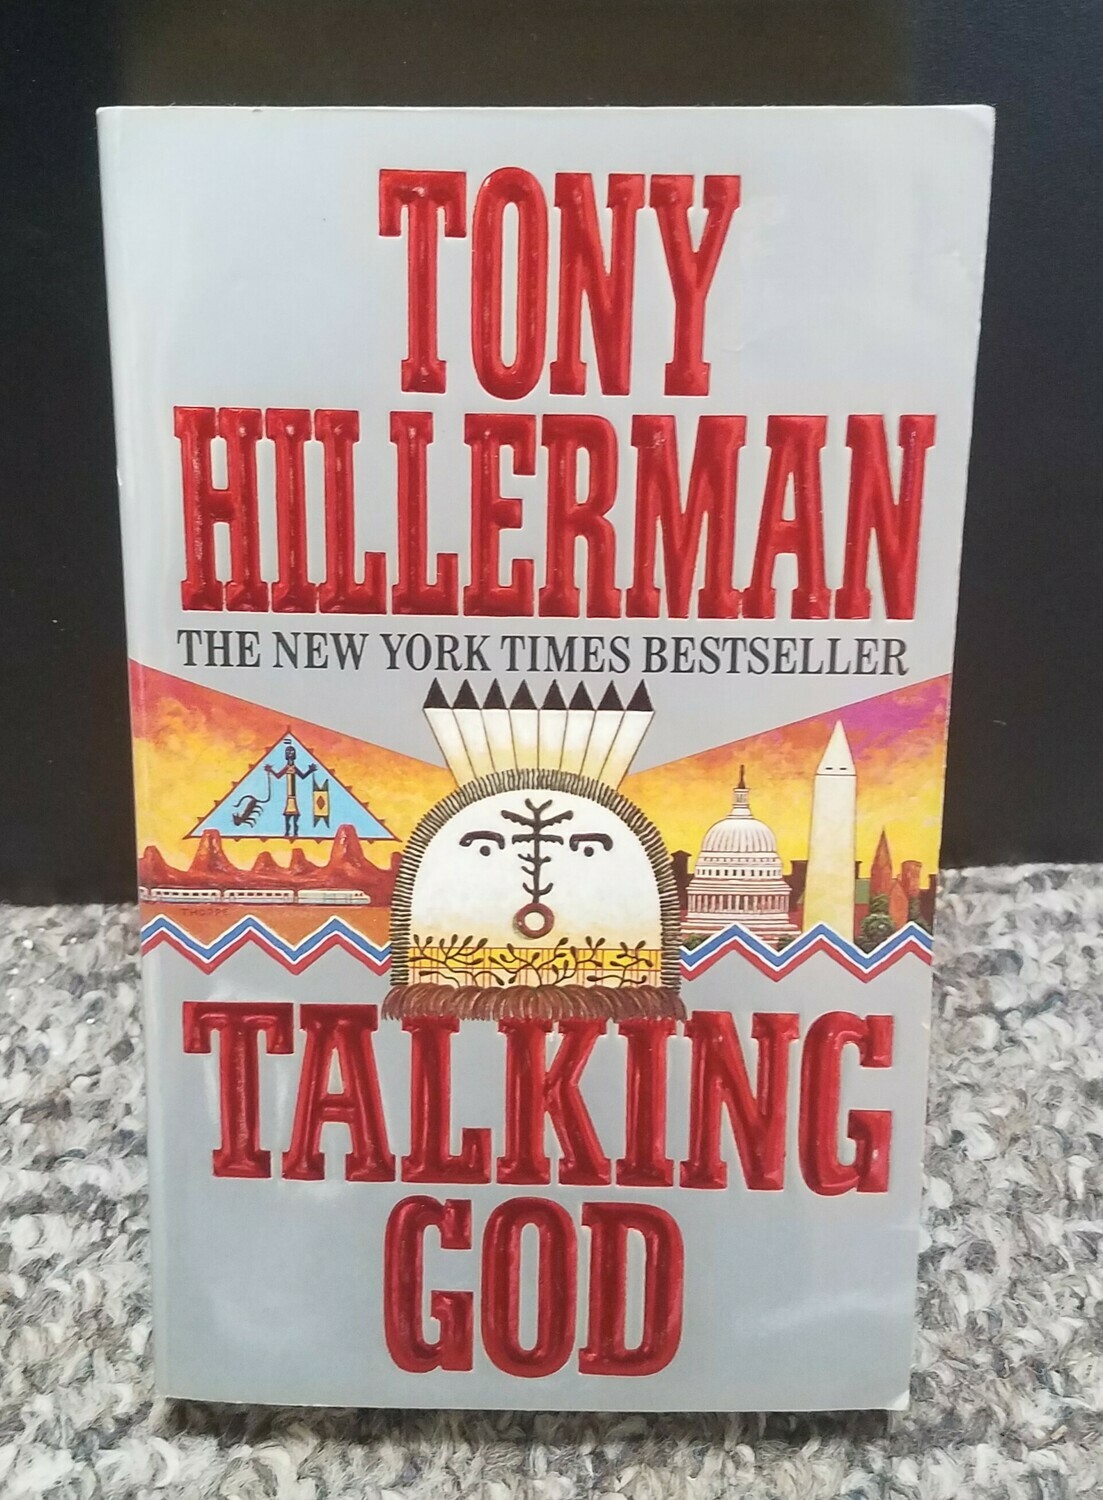 Talking God by Tony Hillerman